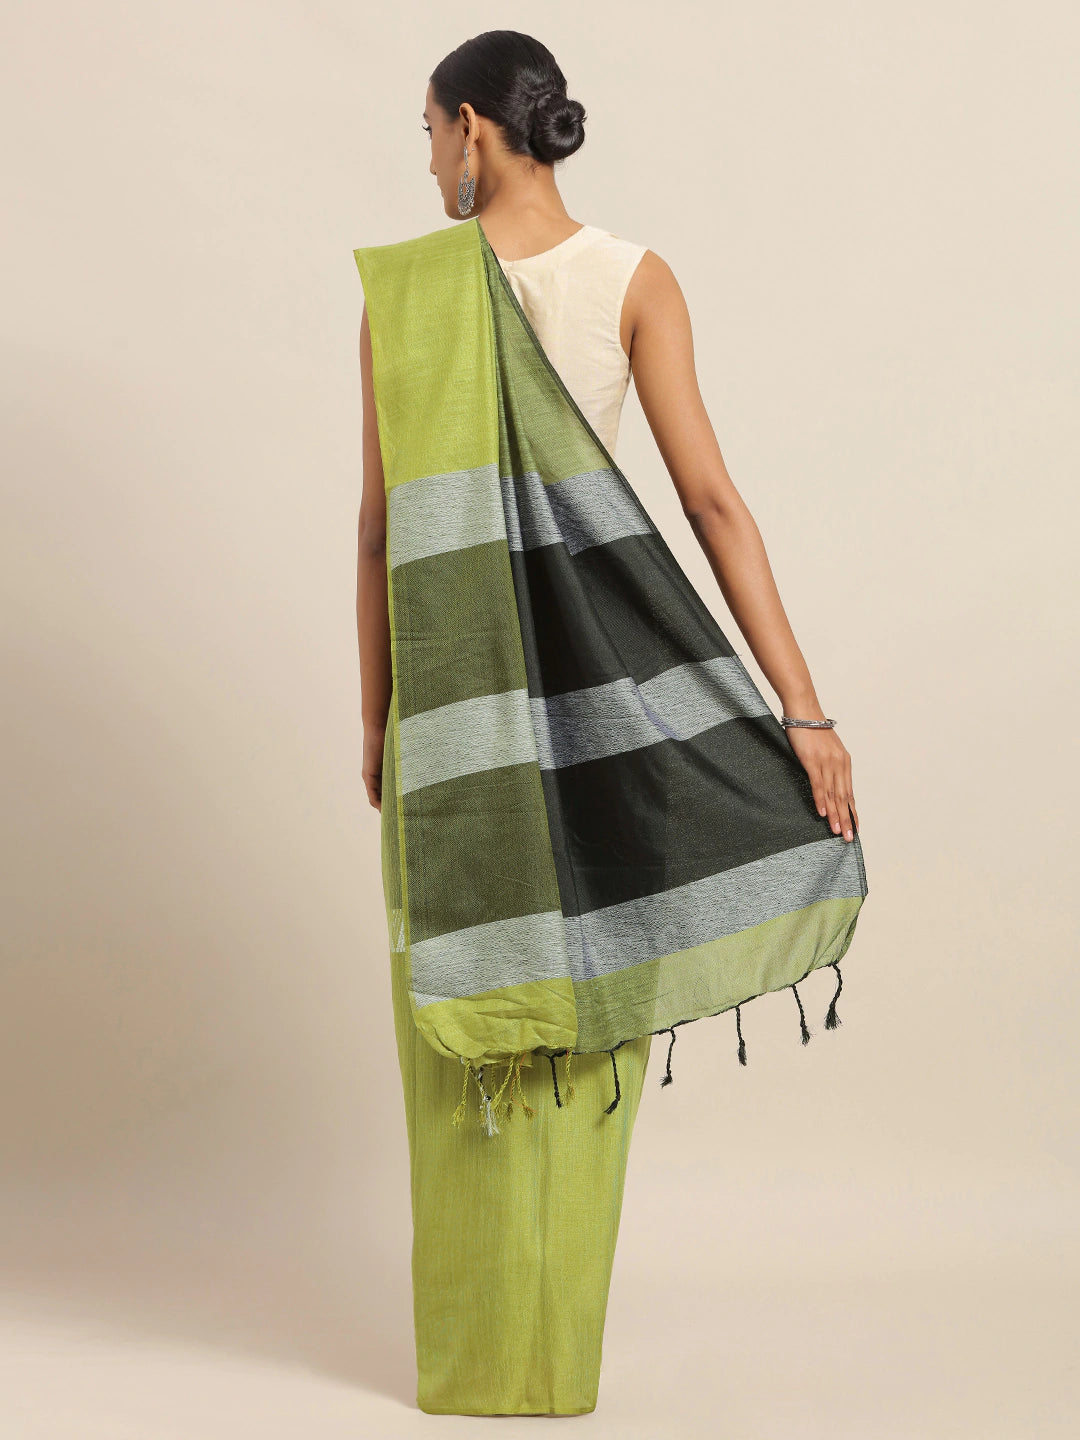 Stylish Green Colour Linen Blend Saree With Zari Work